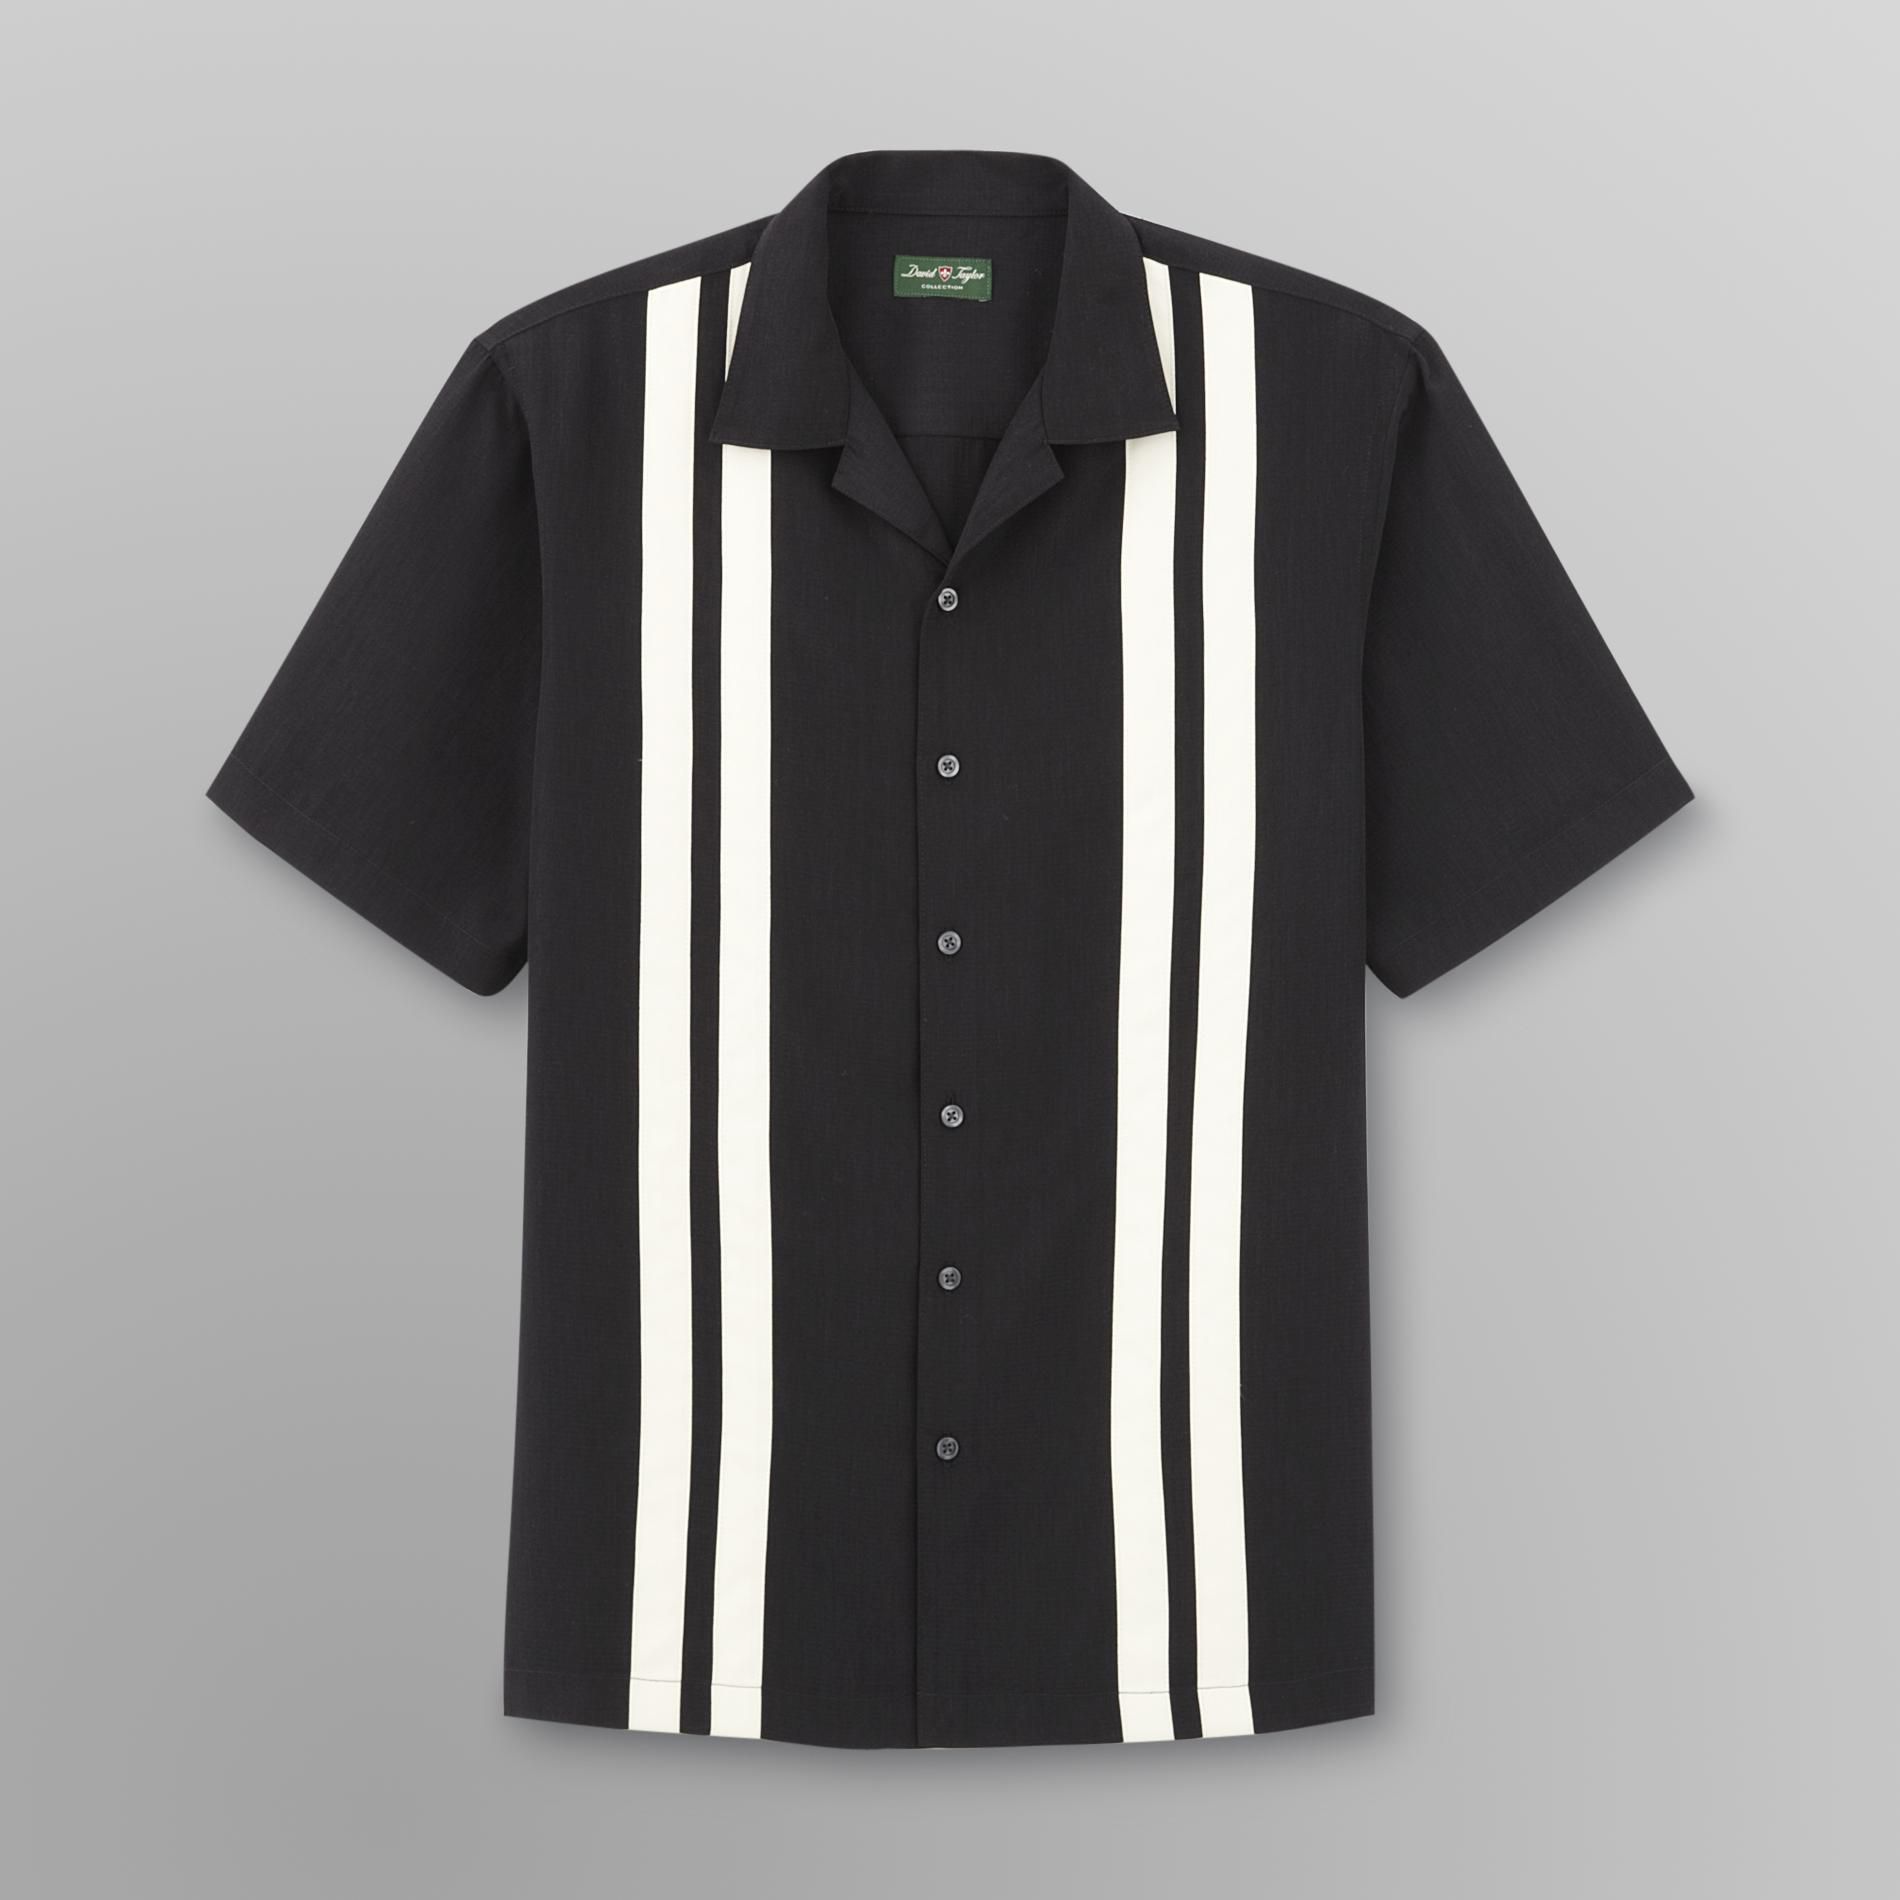 David Taylor Collection Men's Camp Shirt - Vertical Stripe